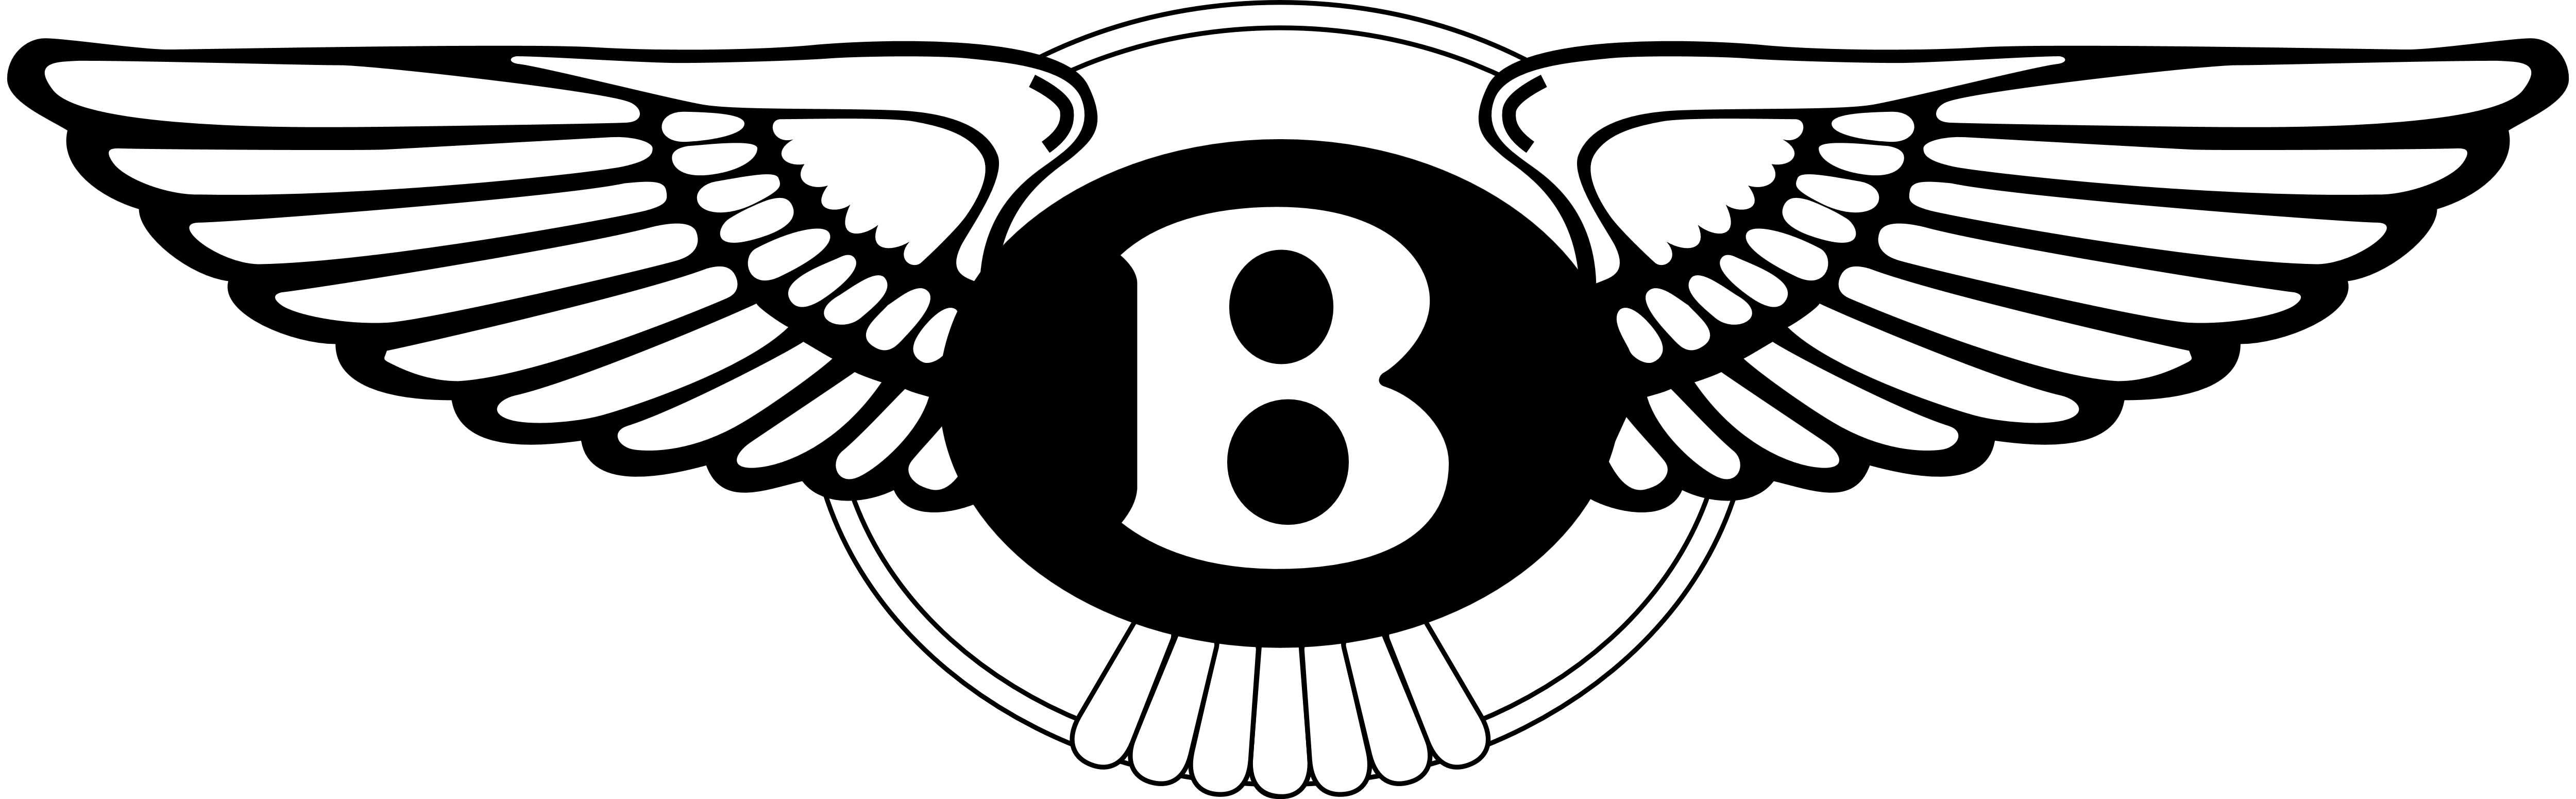 Bently_logo.png